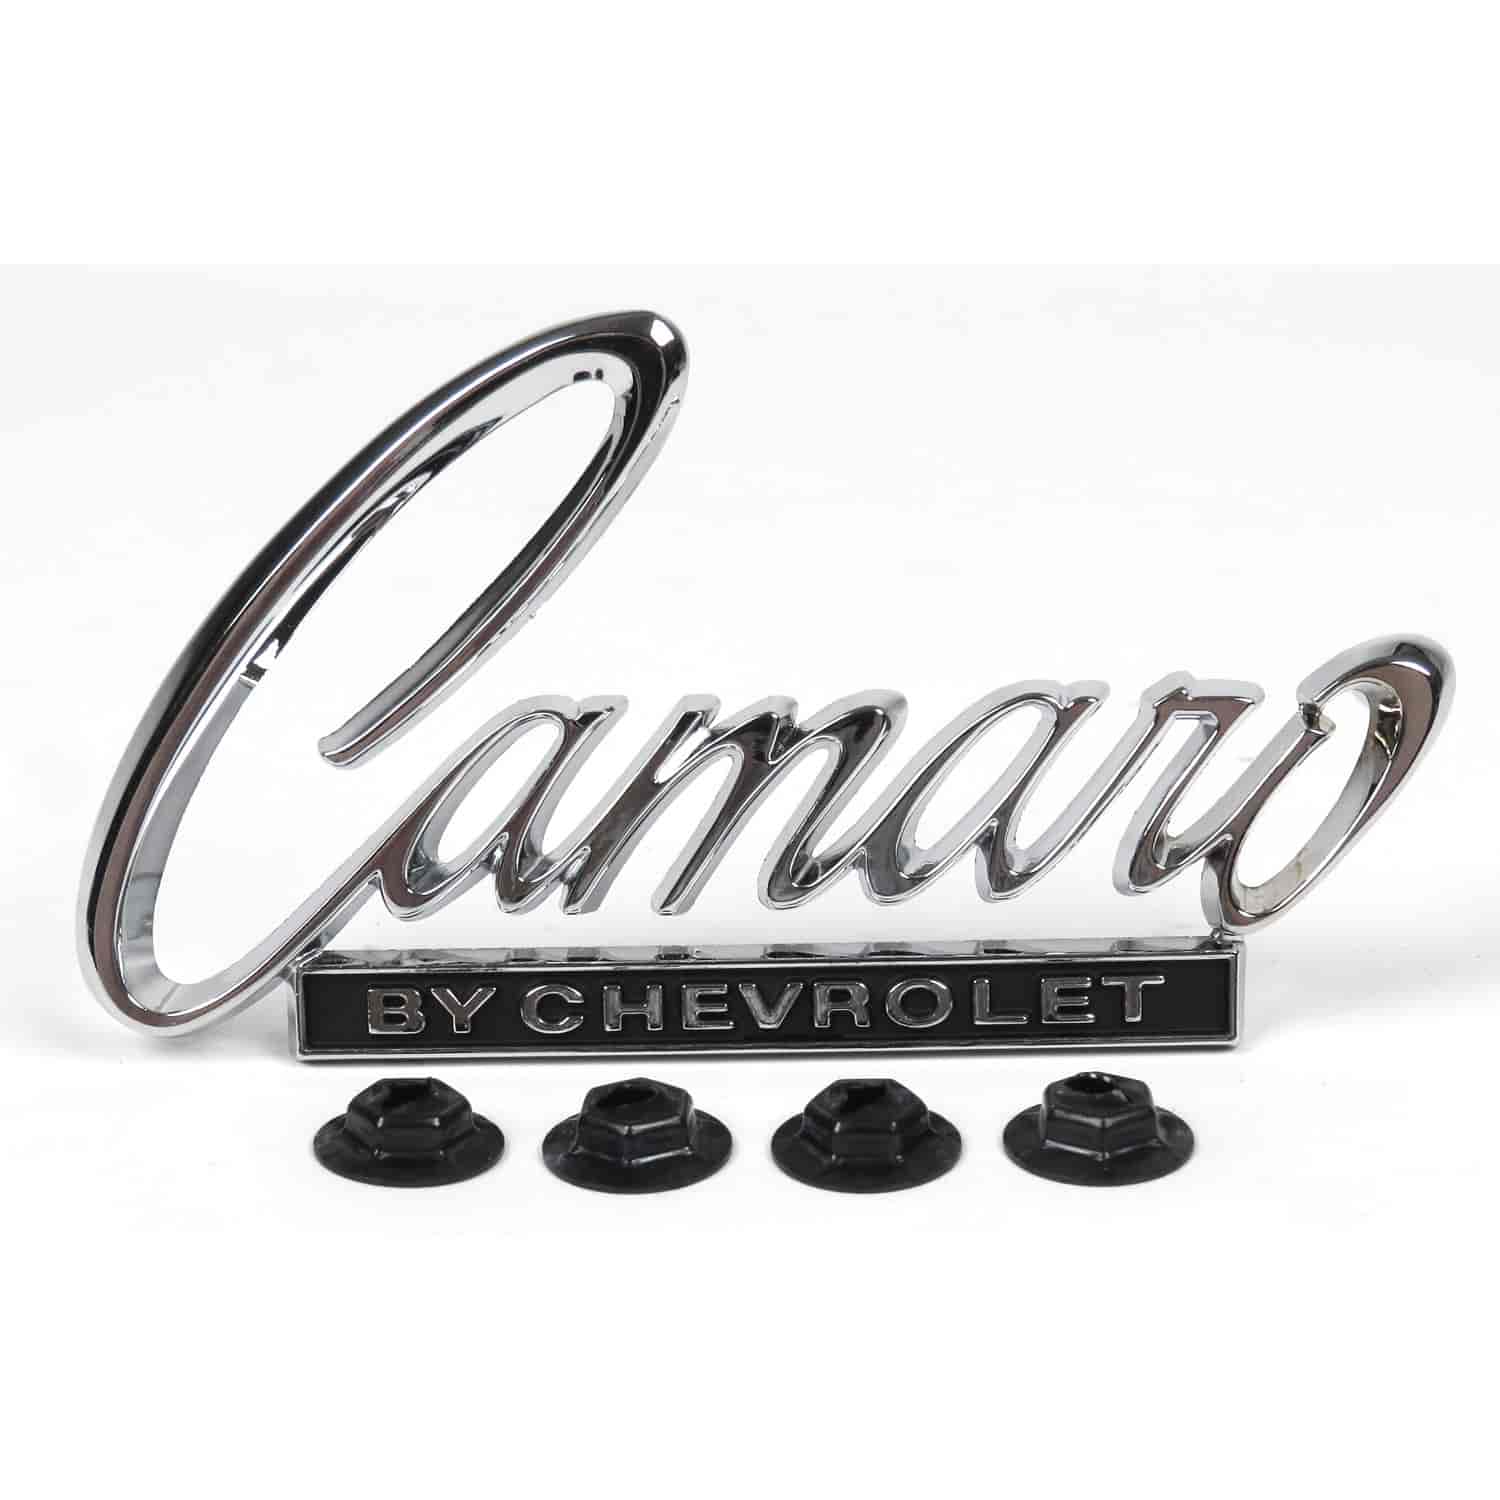 Header Panel/Trunk Lid Emblem "Camaro by Chevrolet"